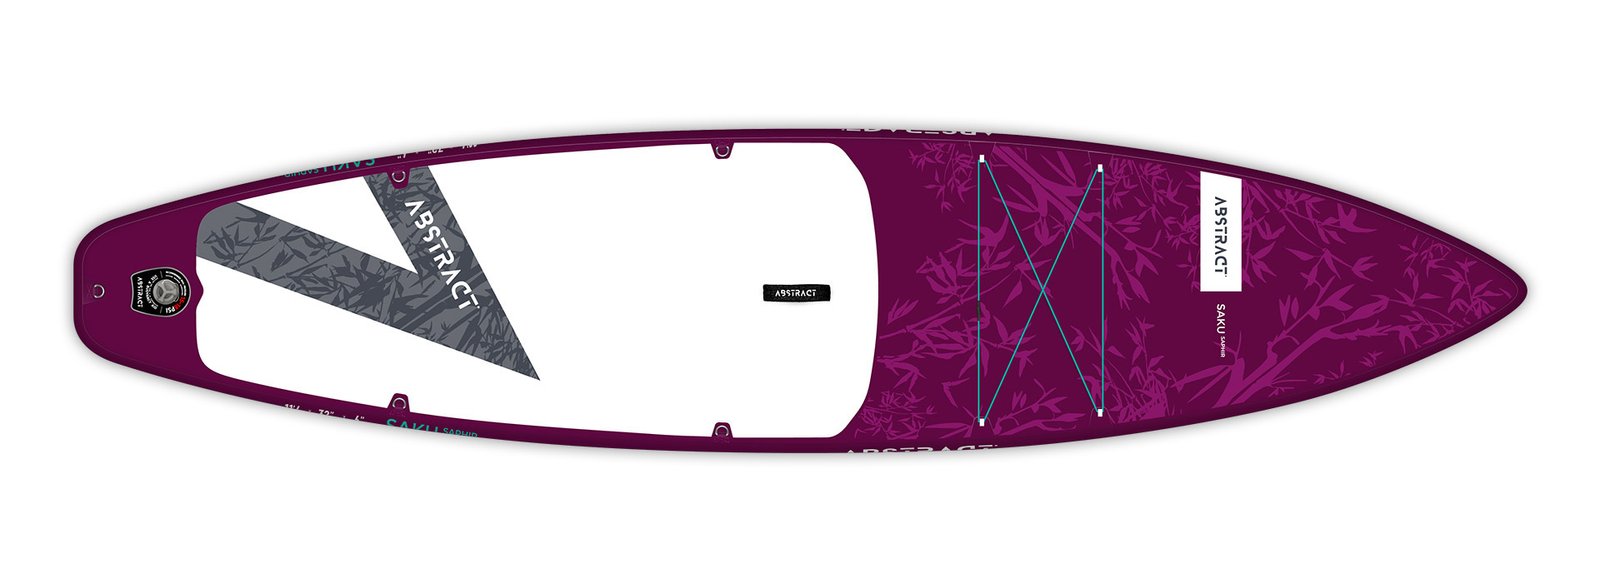 Planche de paddle Board gonflable Saku Saphir (violet) Abstract 2021